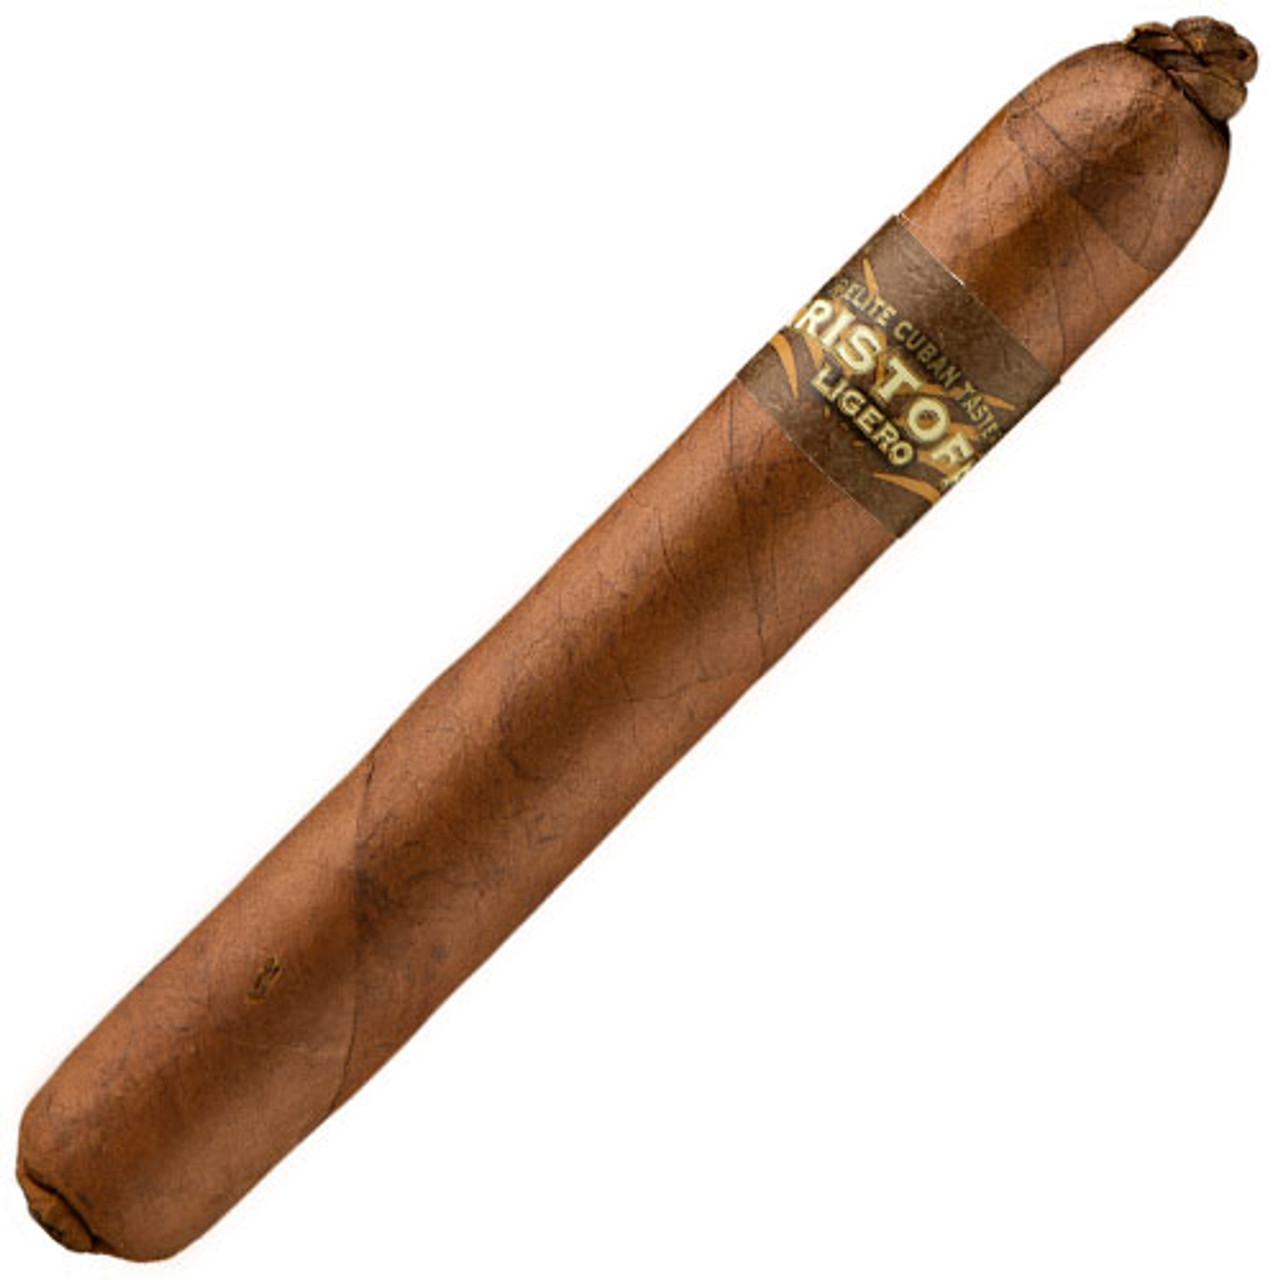 Kristoff Ligero Criollo Robusto Cigars - 5.5 x 54 (Box of 20)